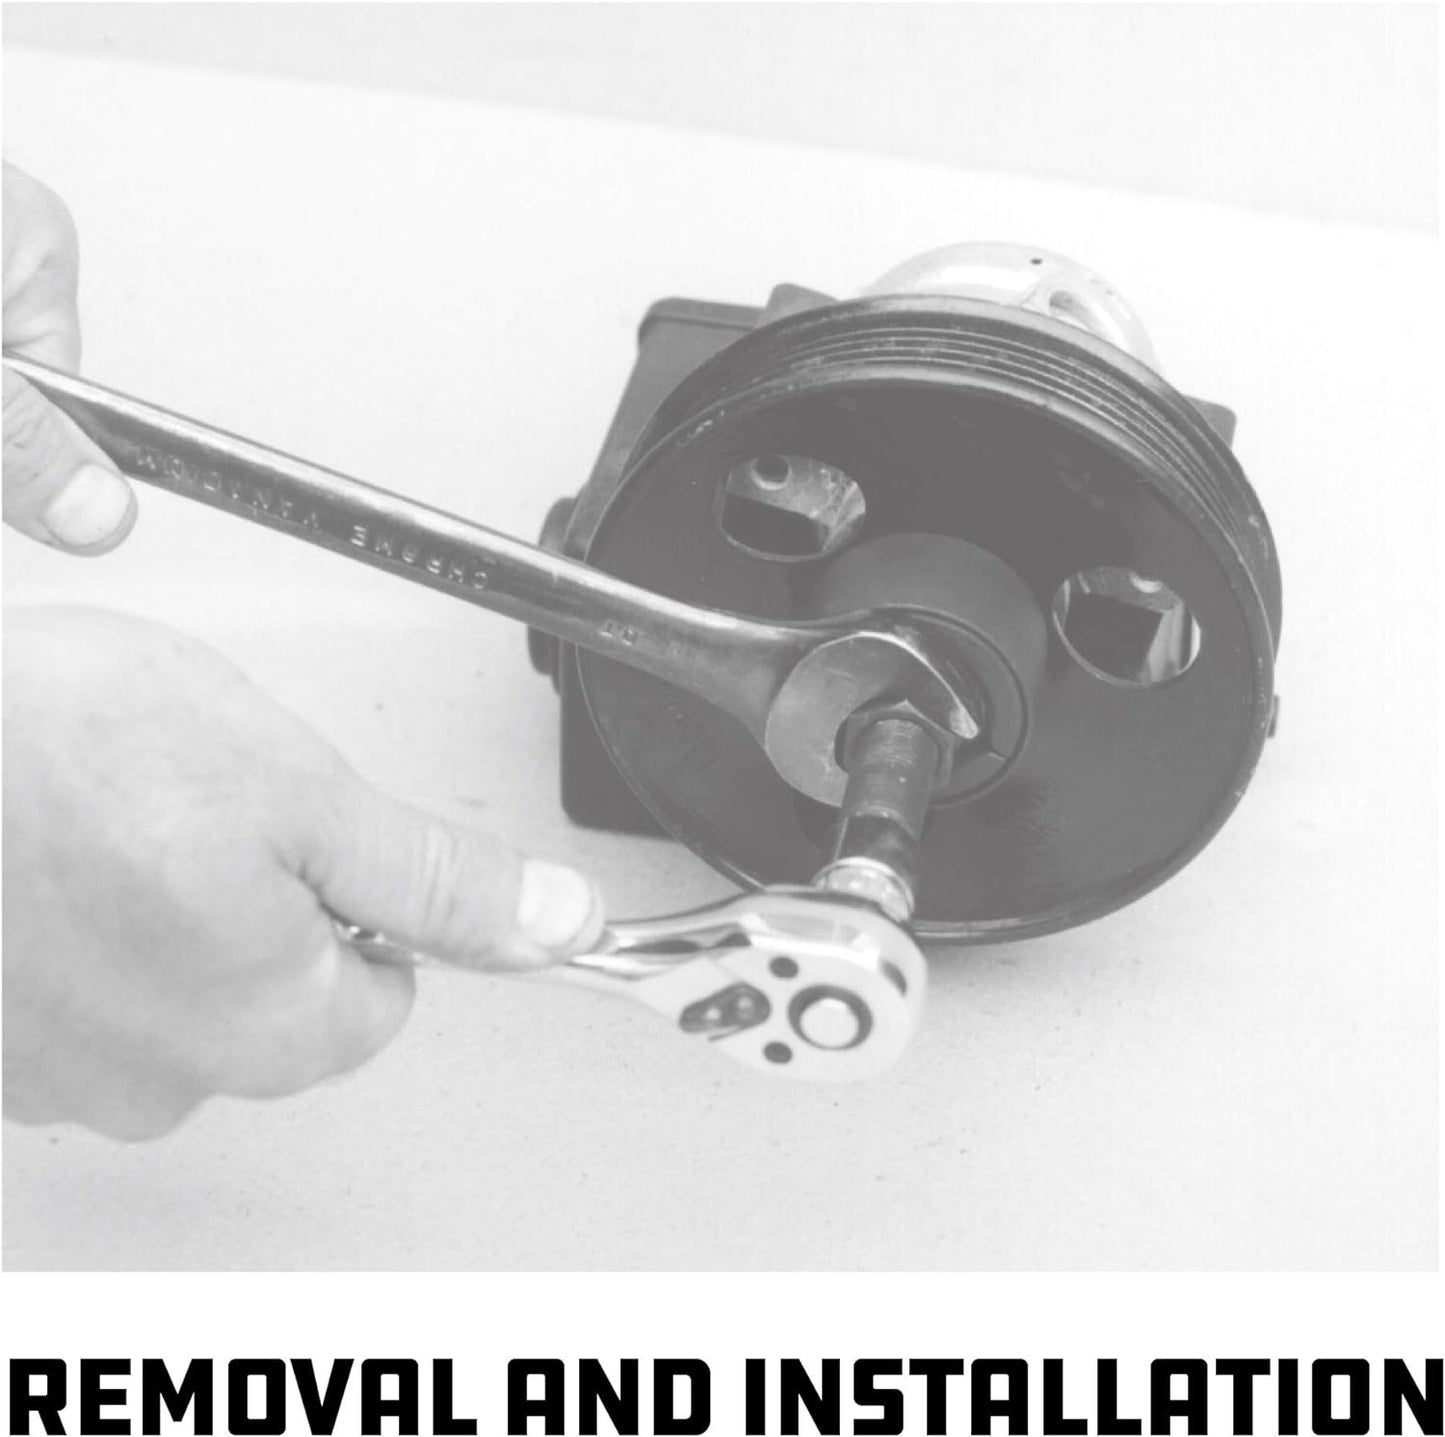 Powerbuilt Power Steering and Alternator Pulley Remove and Install Tool Set, Replace Vehicle Steering Pump, Car Repair Tools, Storage Case - 648605